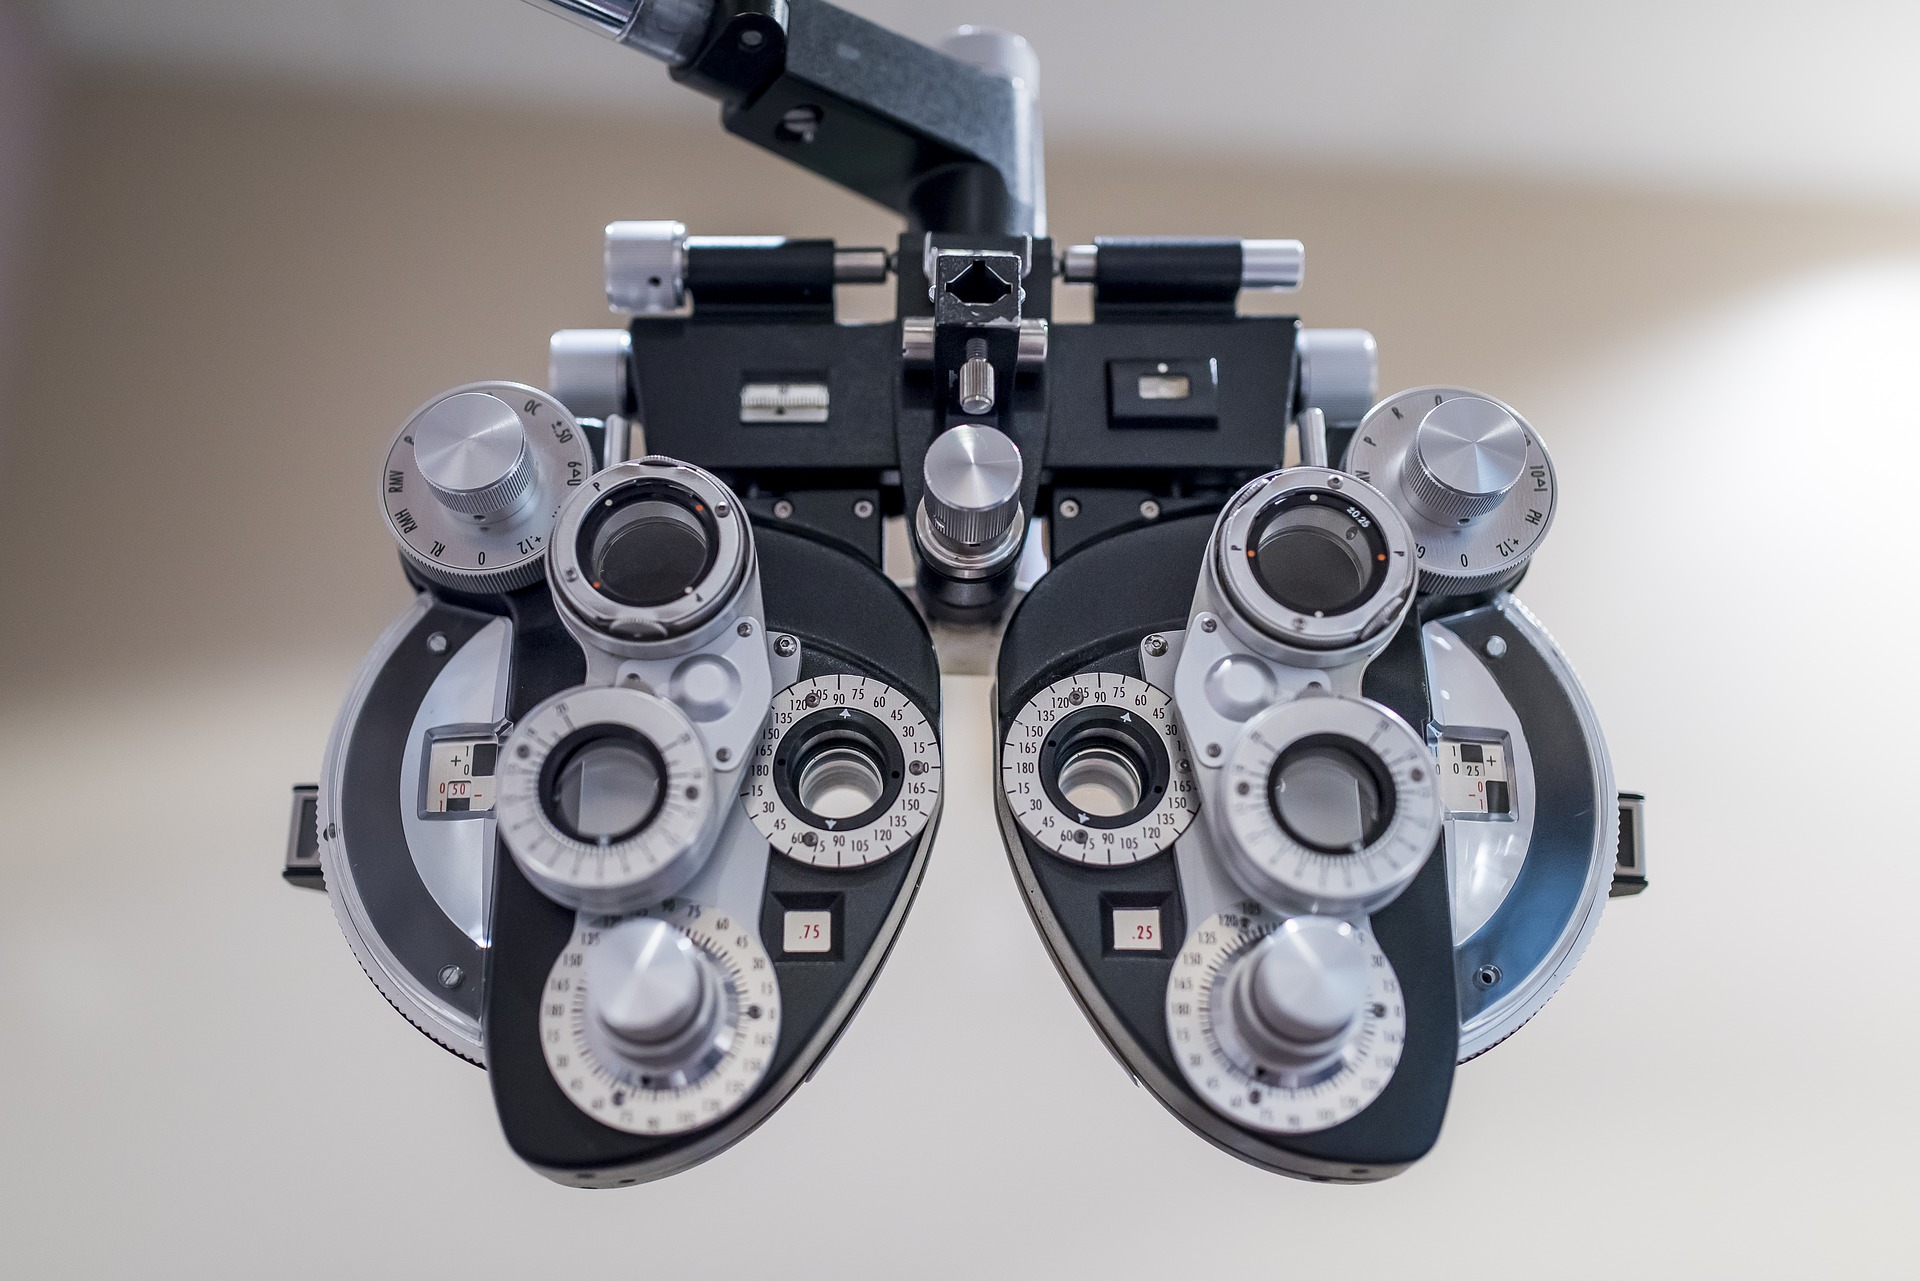 oftamologista maquina generico